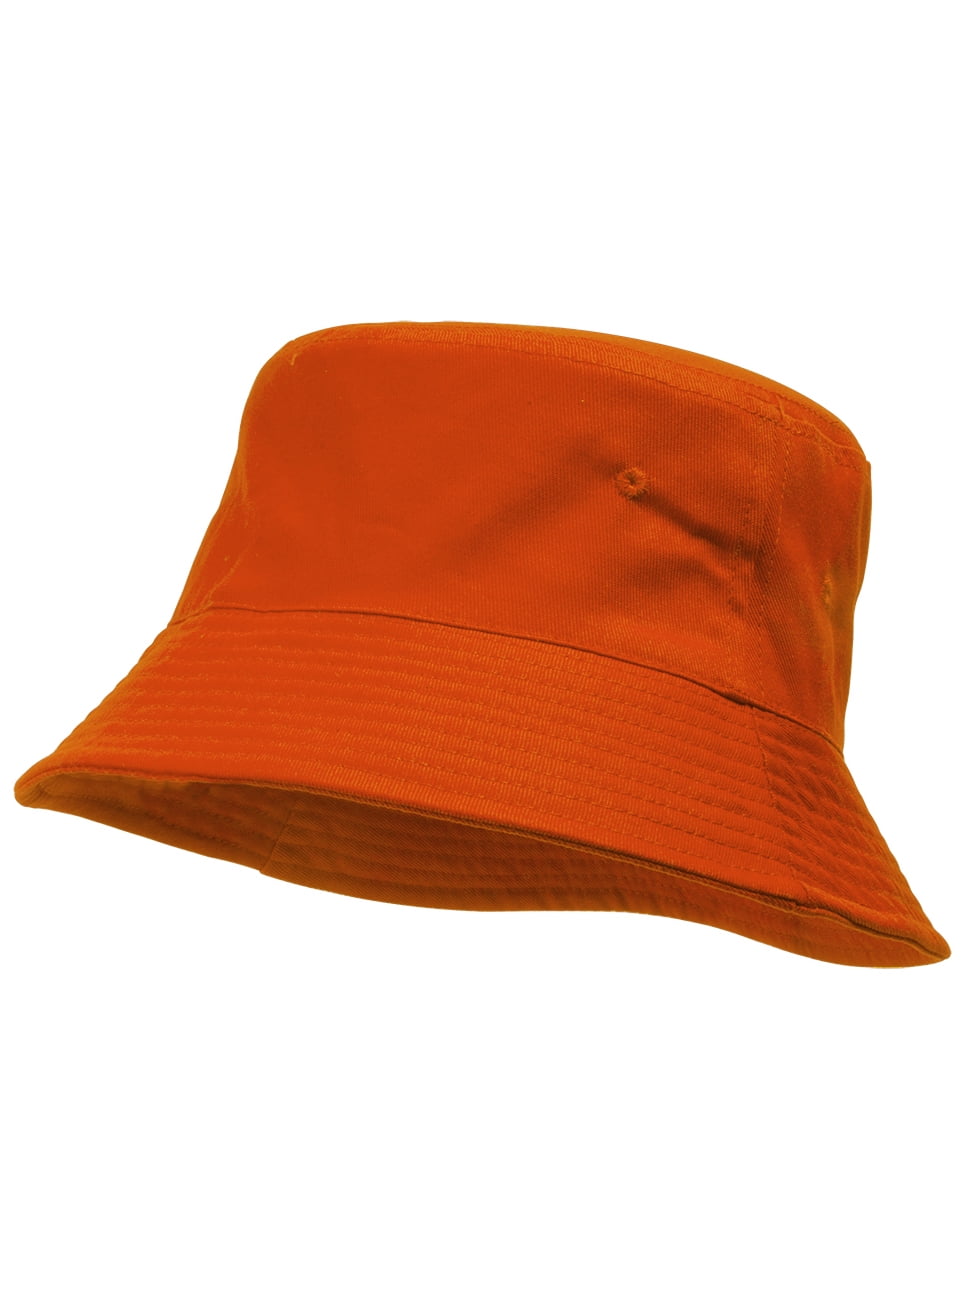 TopHeadwear Blank Cotton Bucket Hat - Black - Small/Medium